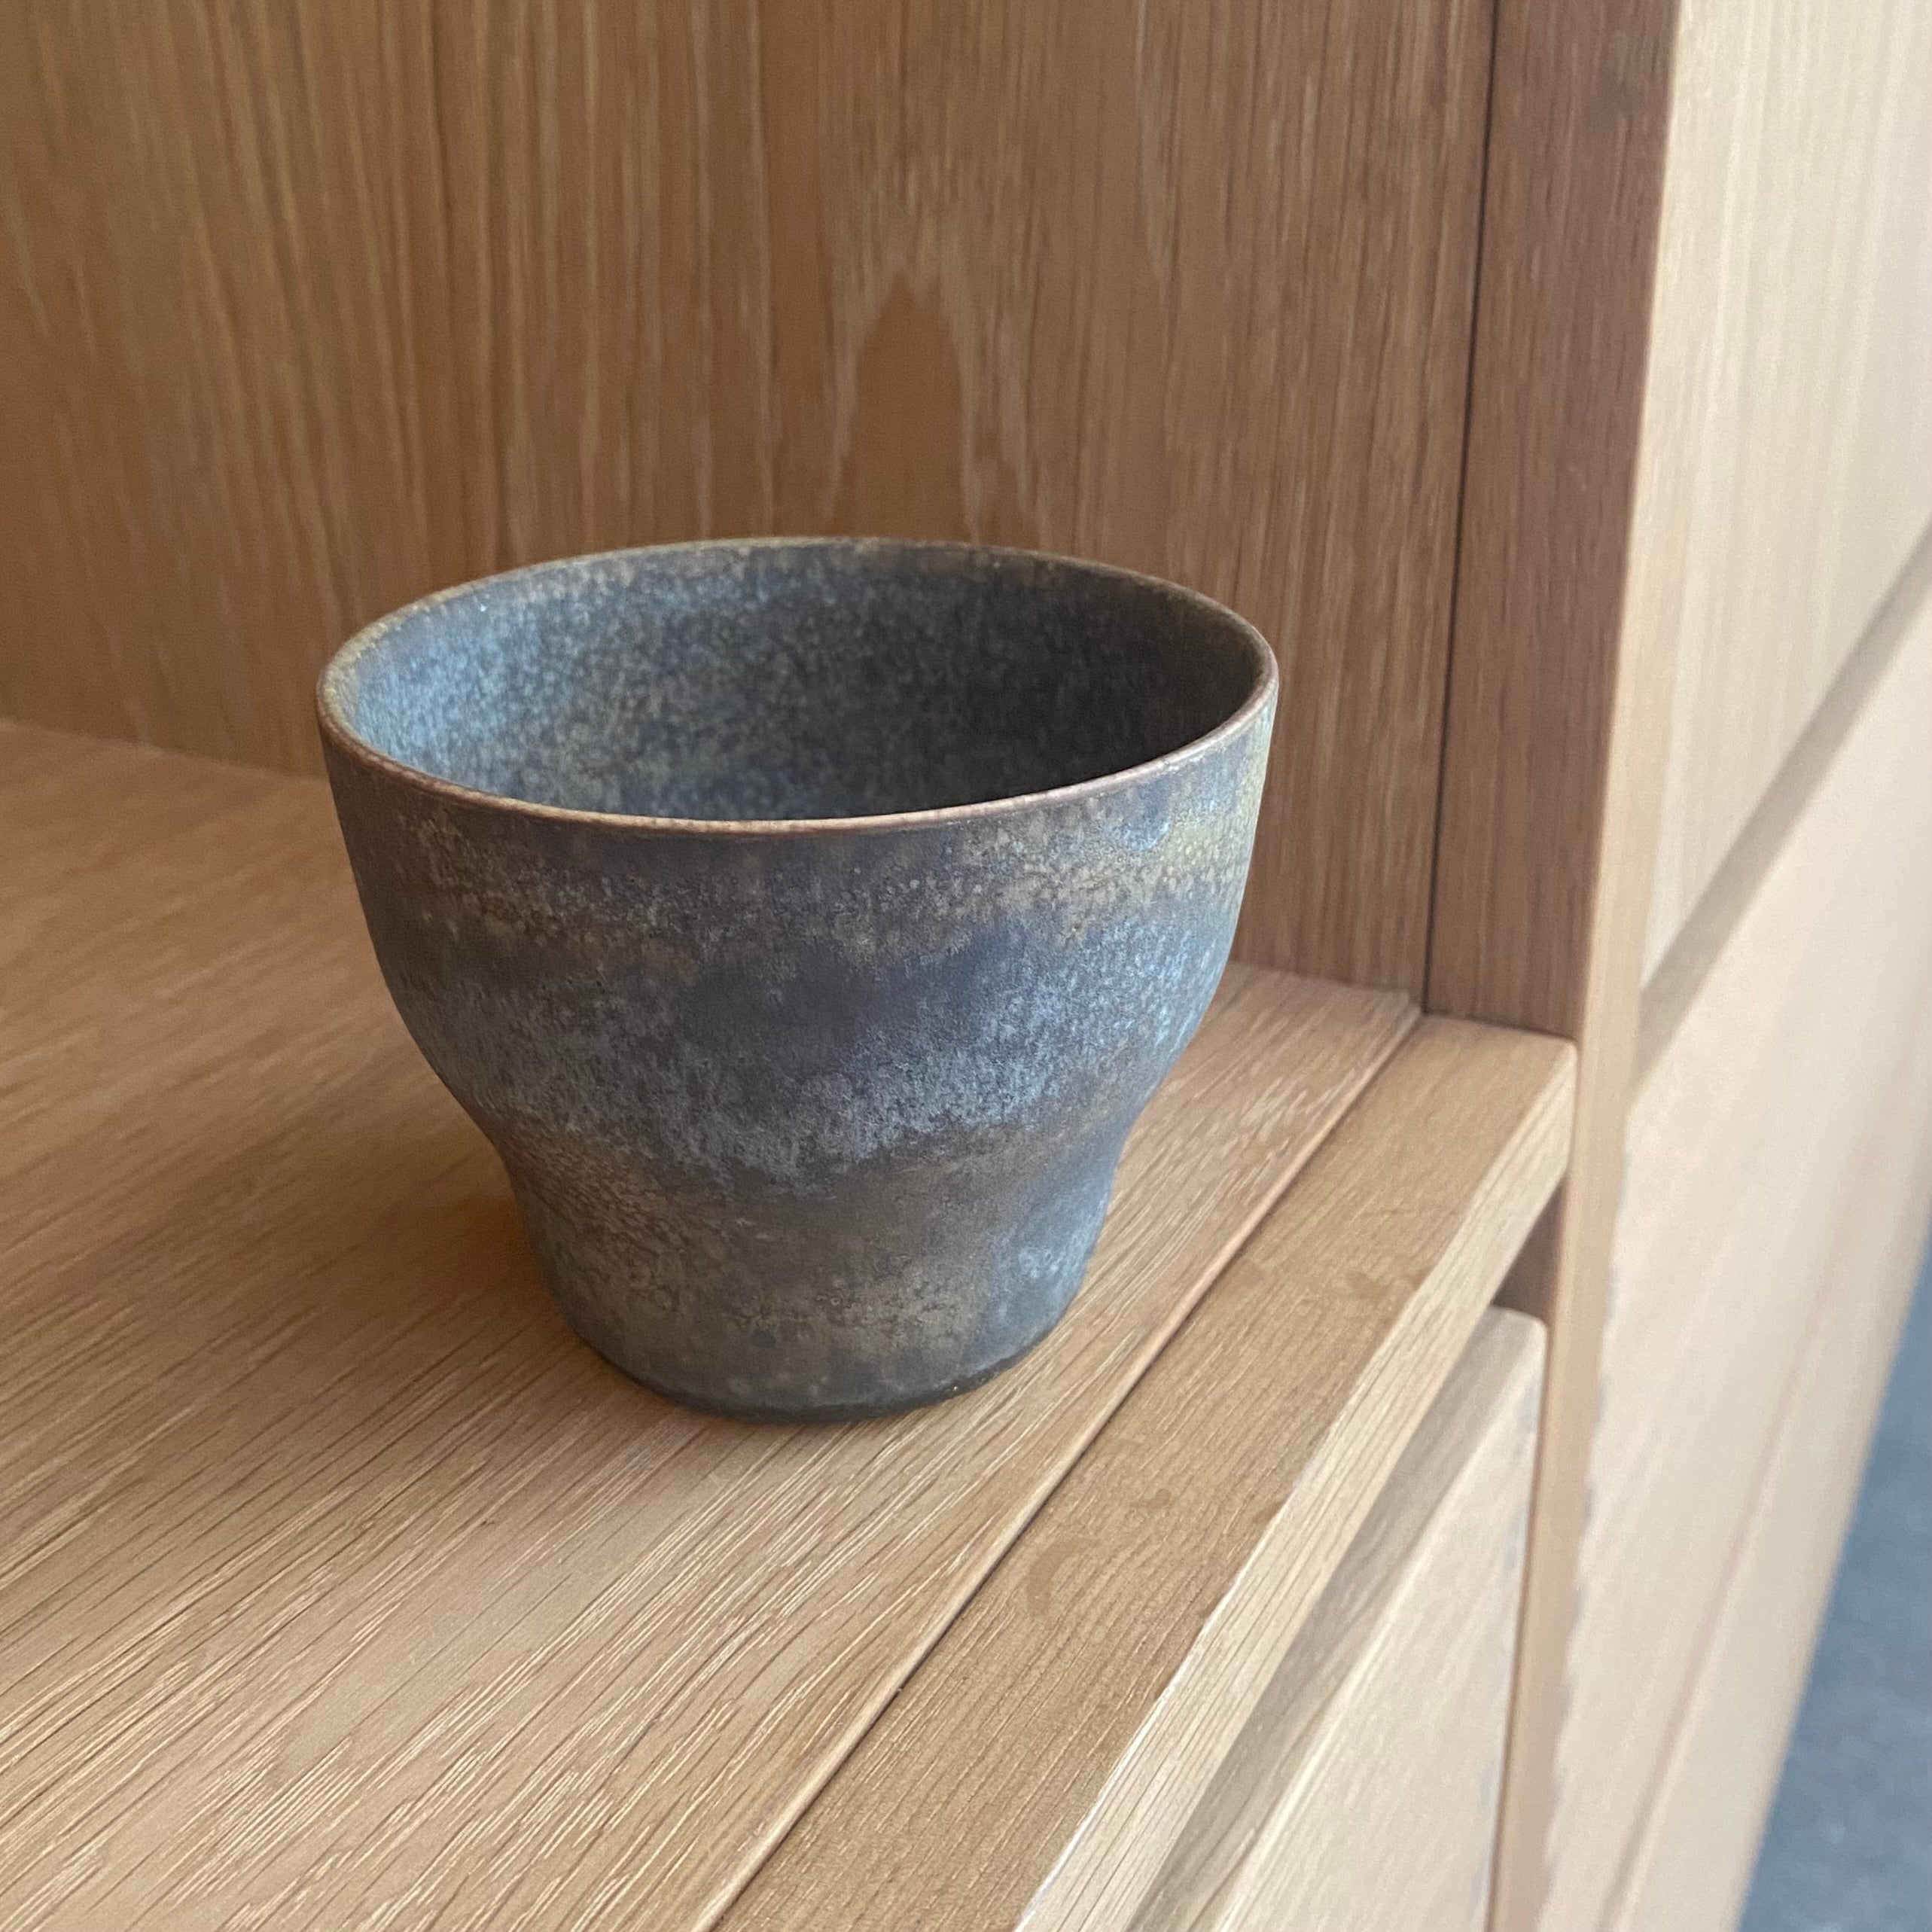 dansk haandlavet kaffekop i farven granit fra danske keramiker oh oak. 